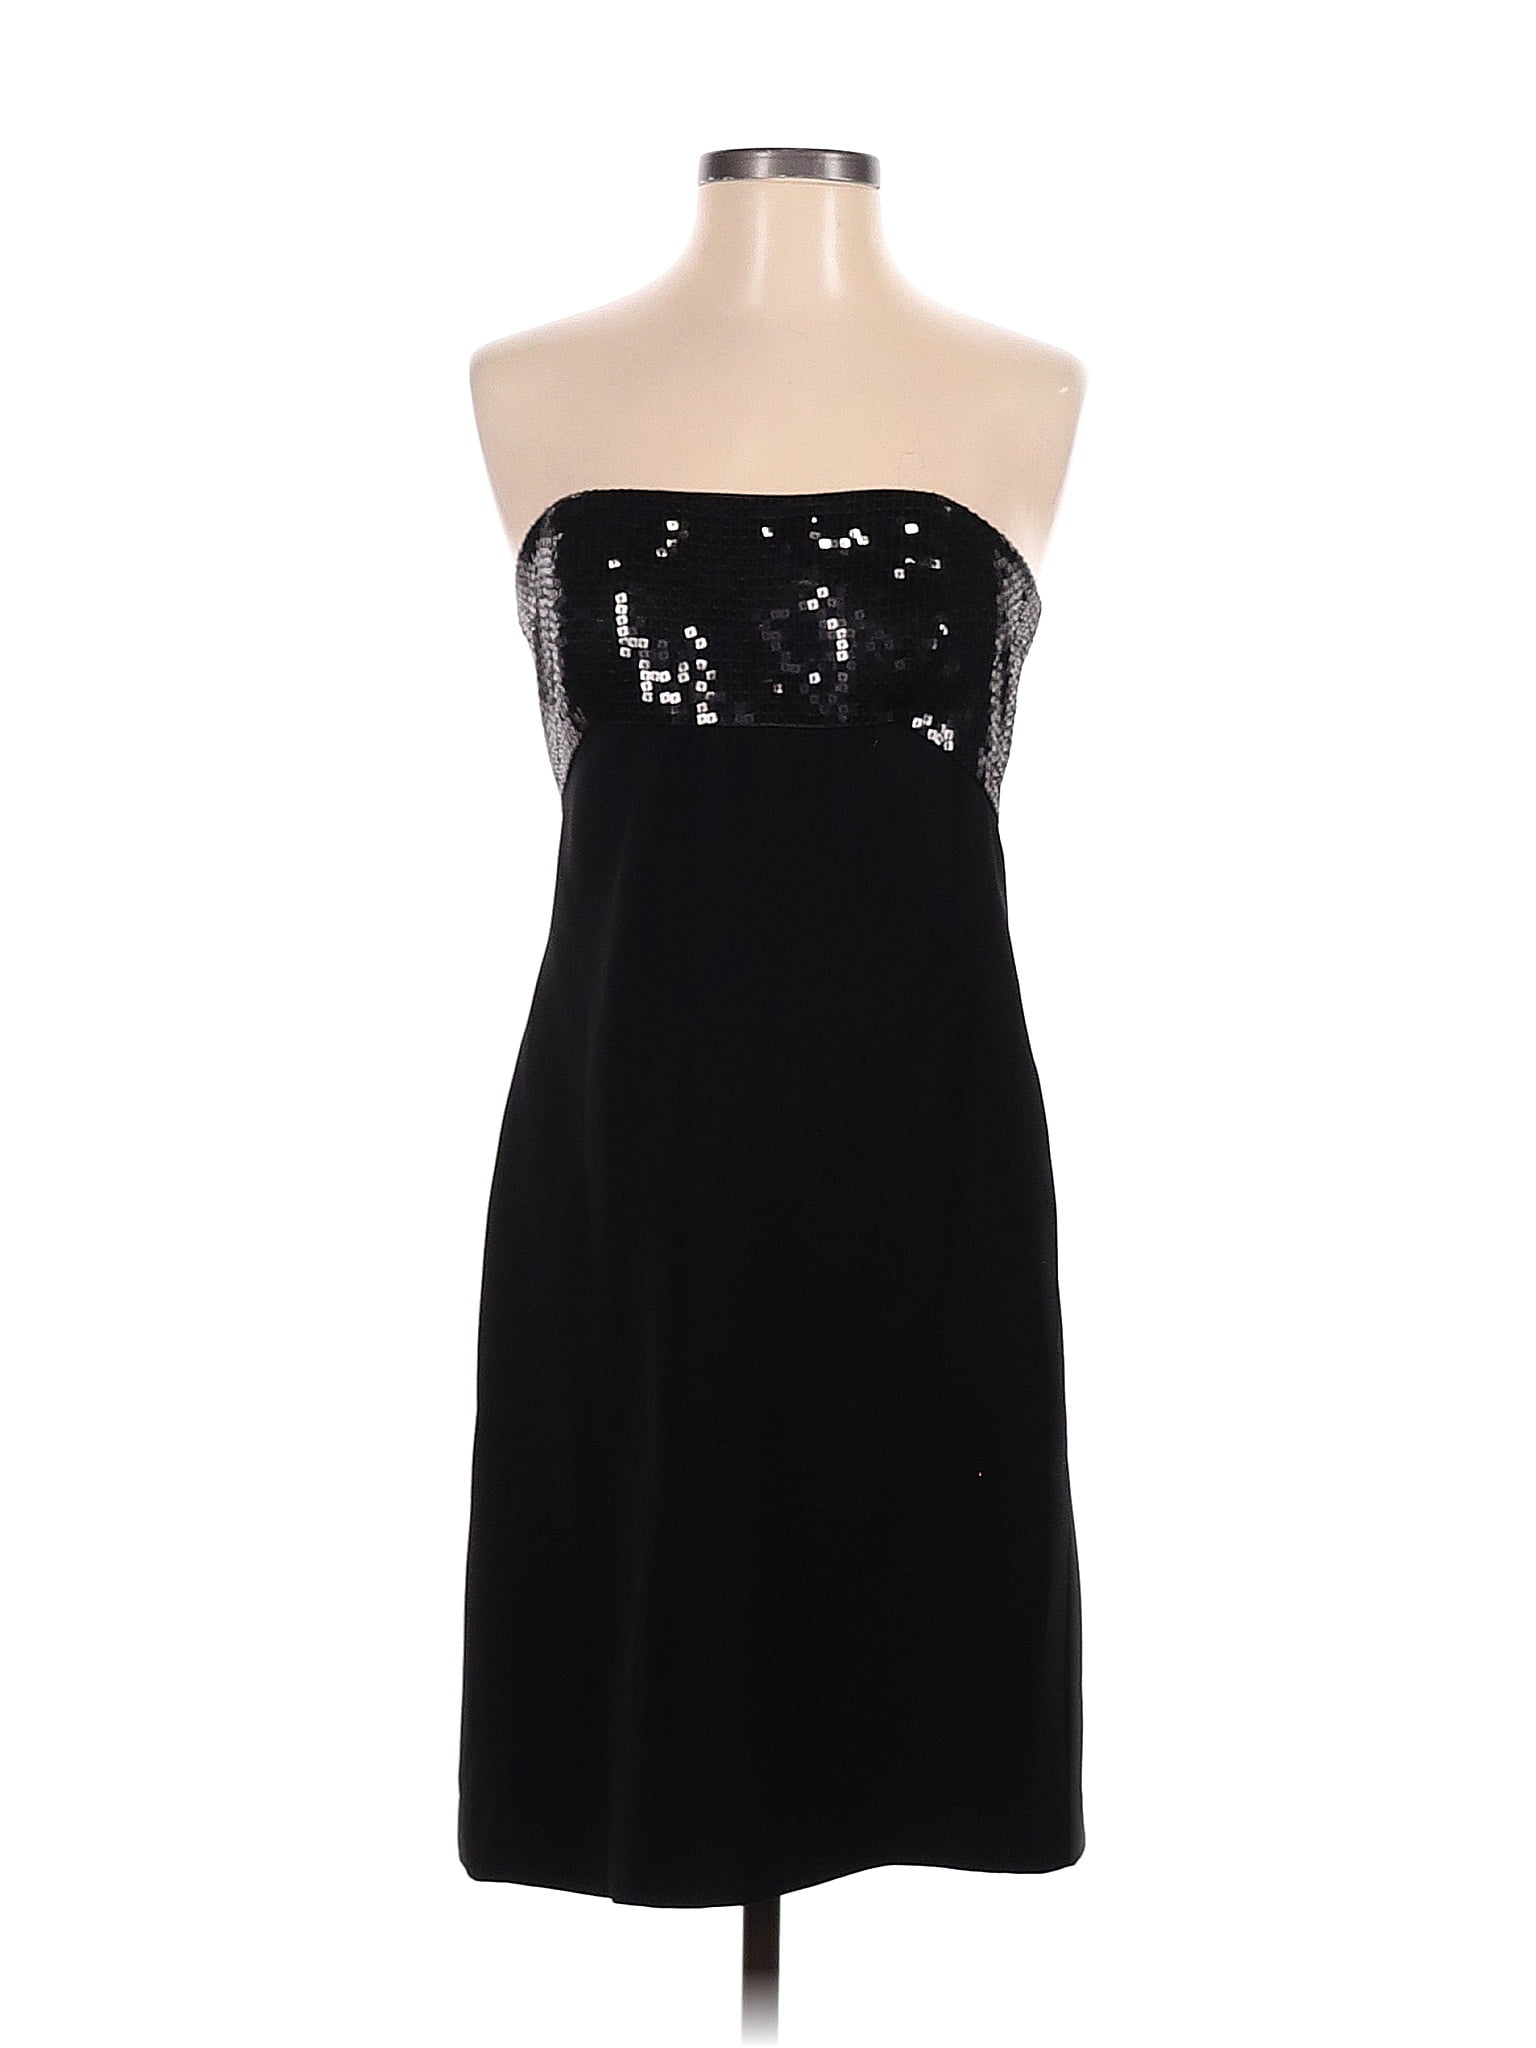 Ann Taylor Factory Black Cocktail Dress Size 4 (Petite) - 77% off | thredUP